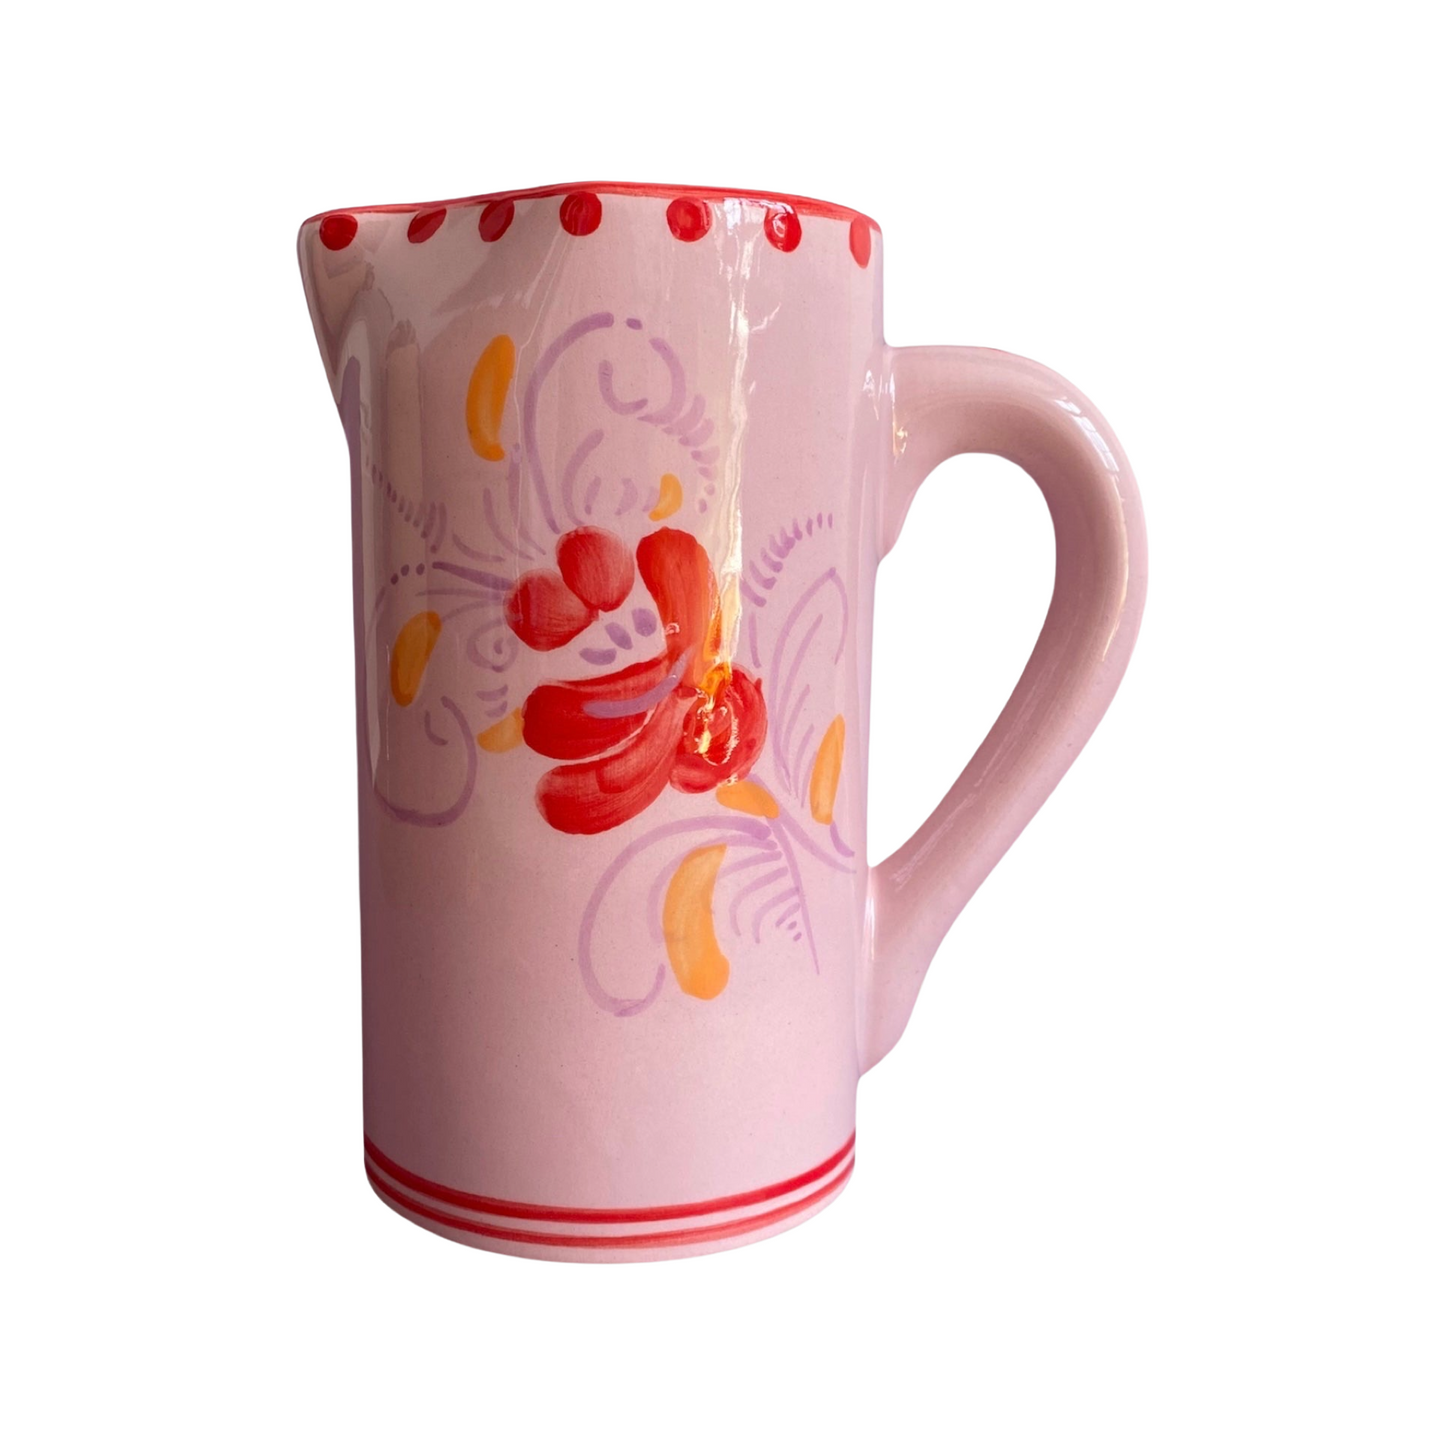 Drunk In Love Jug / Vase - Lilac & Red Floral